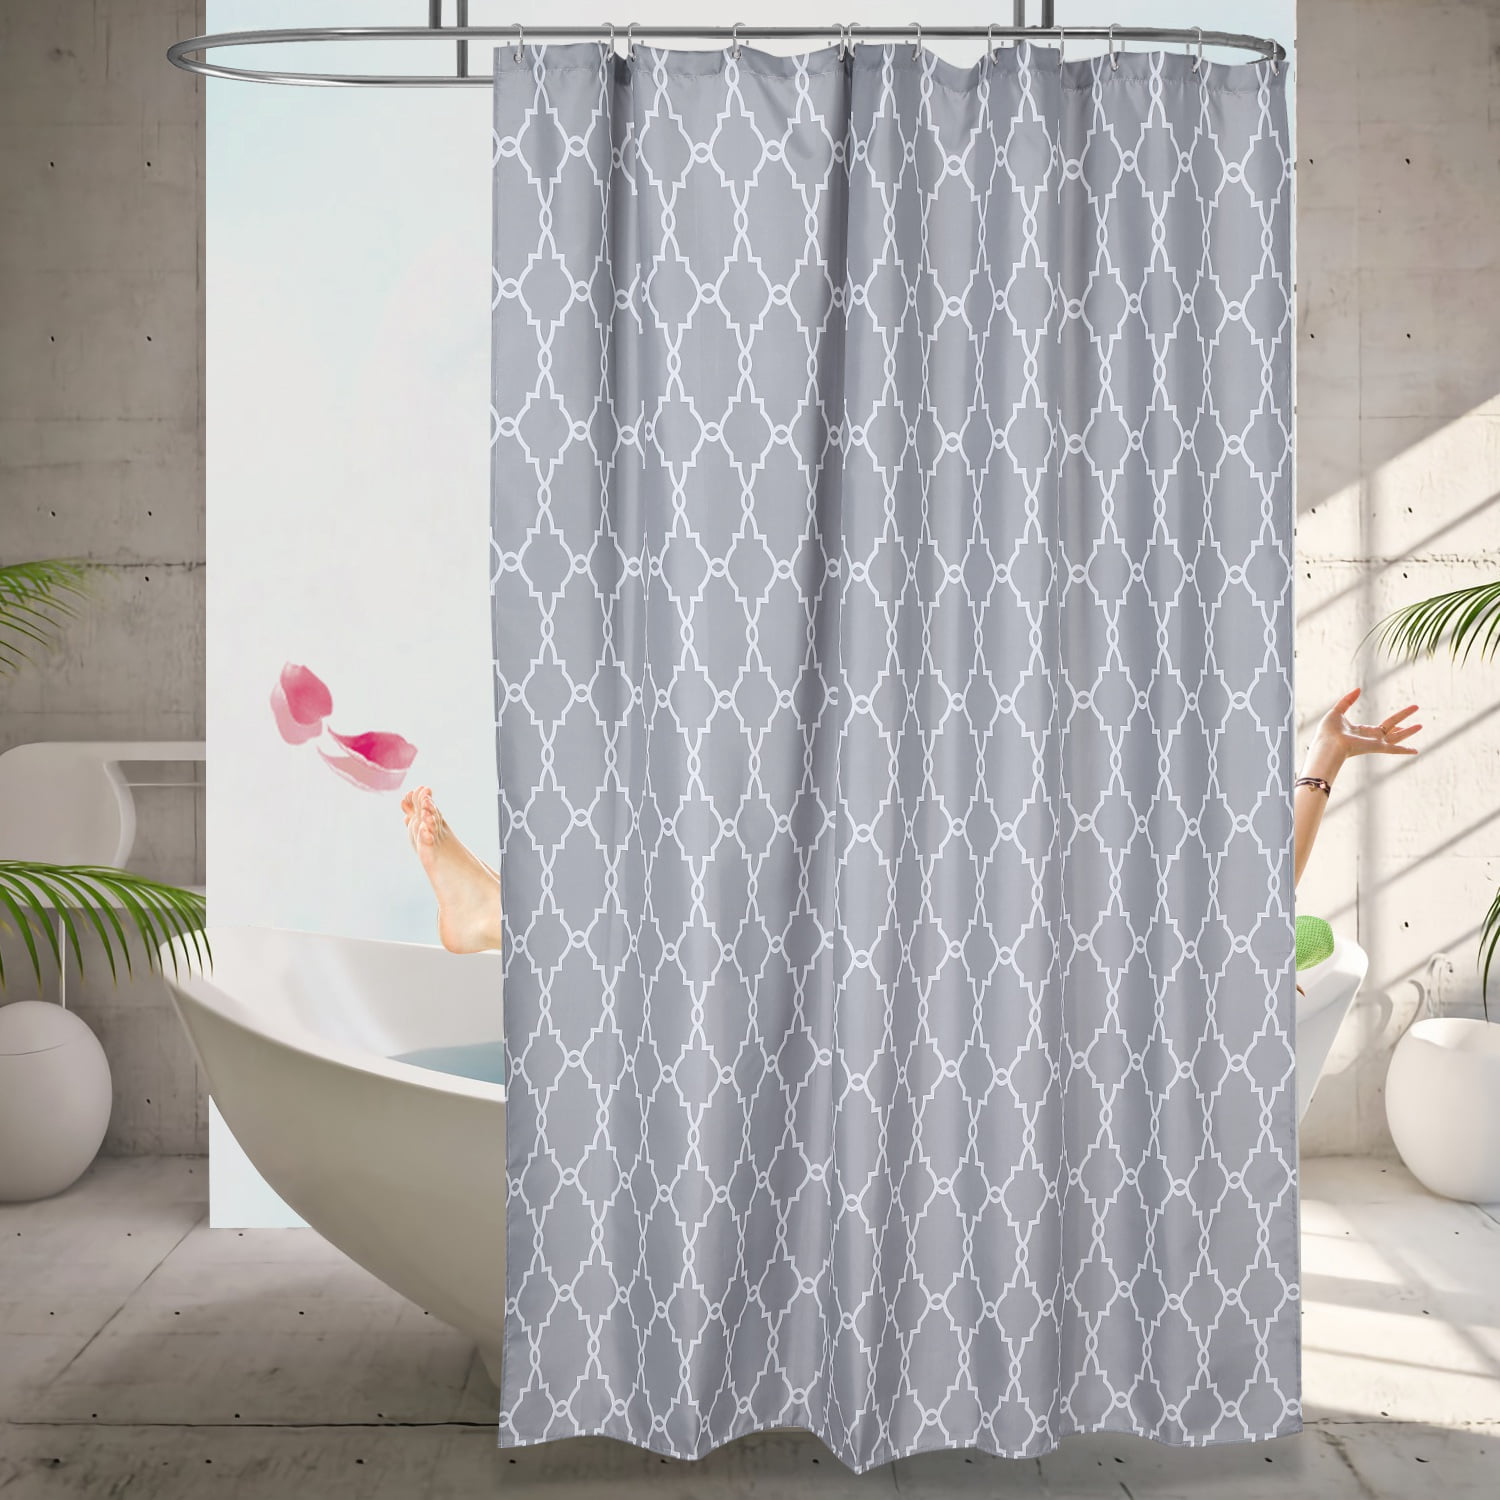 Customized Shower Curtain Waterproof Polyester Fabric & 12 Hooks Bathroom Mat 